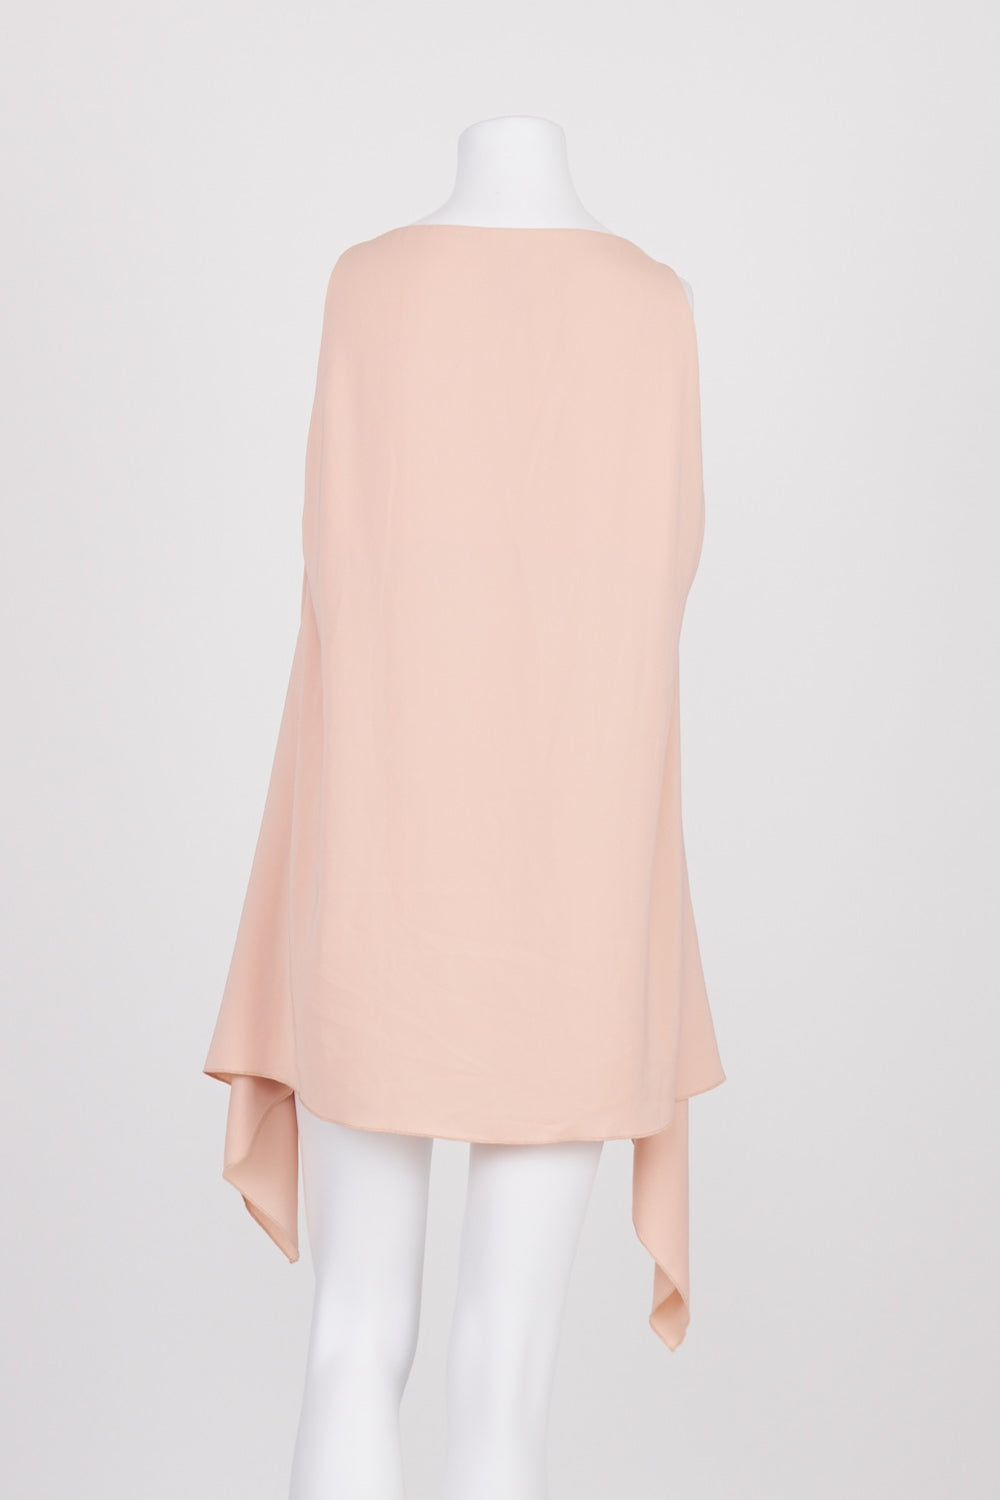 Acler Pink Sleeveless Dress 12